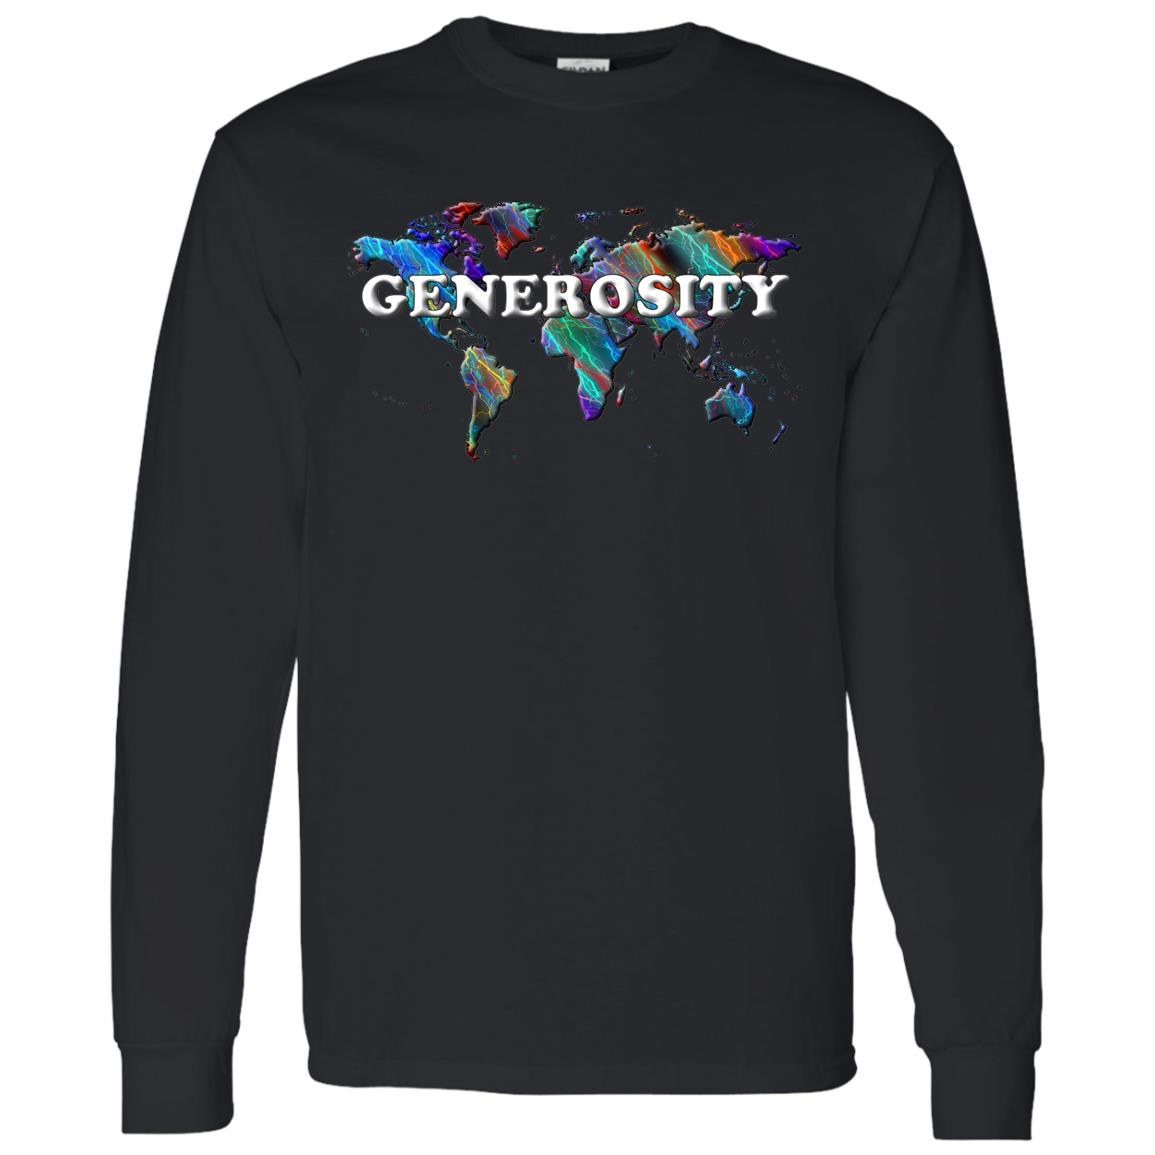 Generosity Long Sleeve T-Shirt